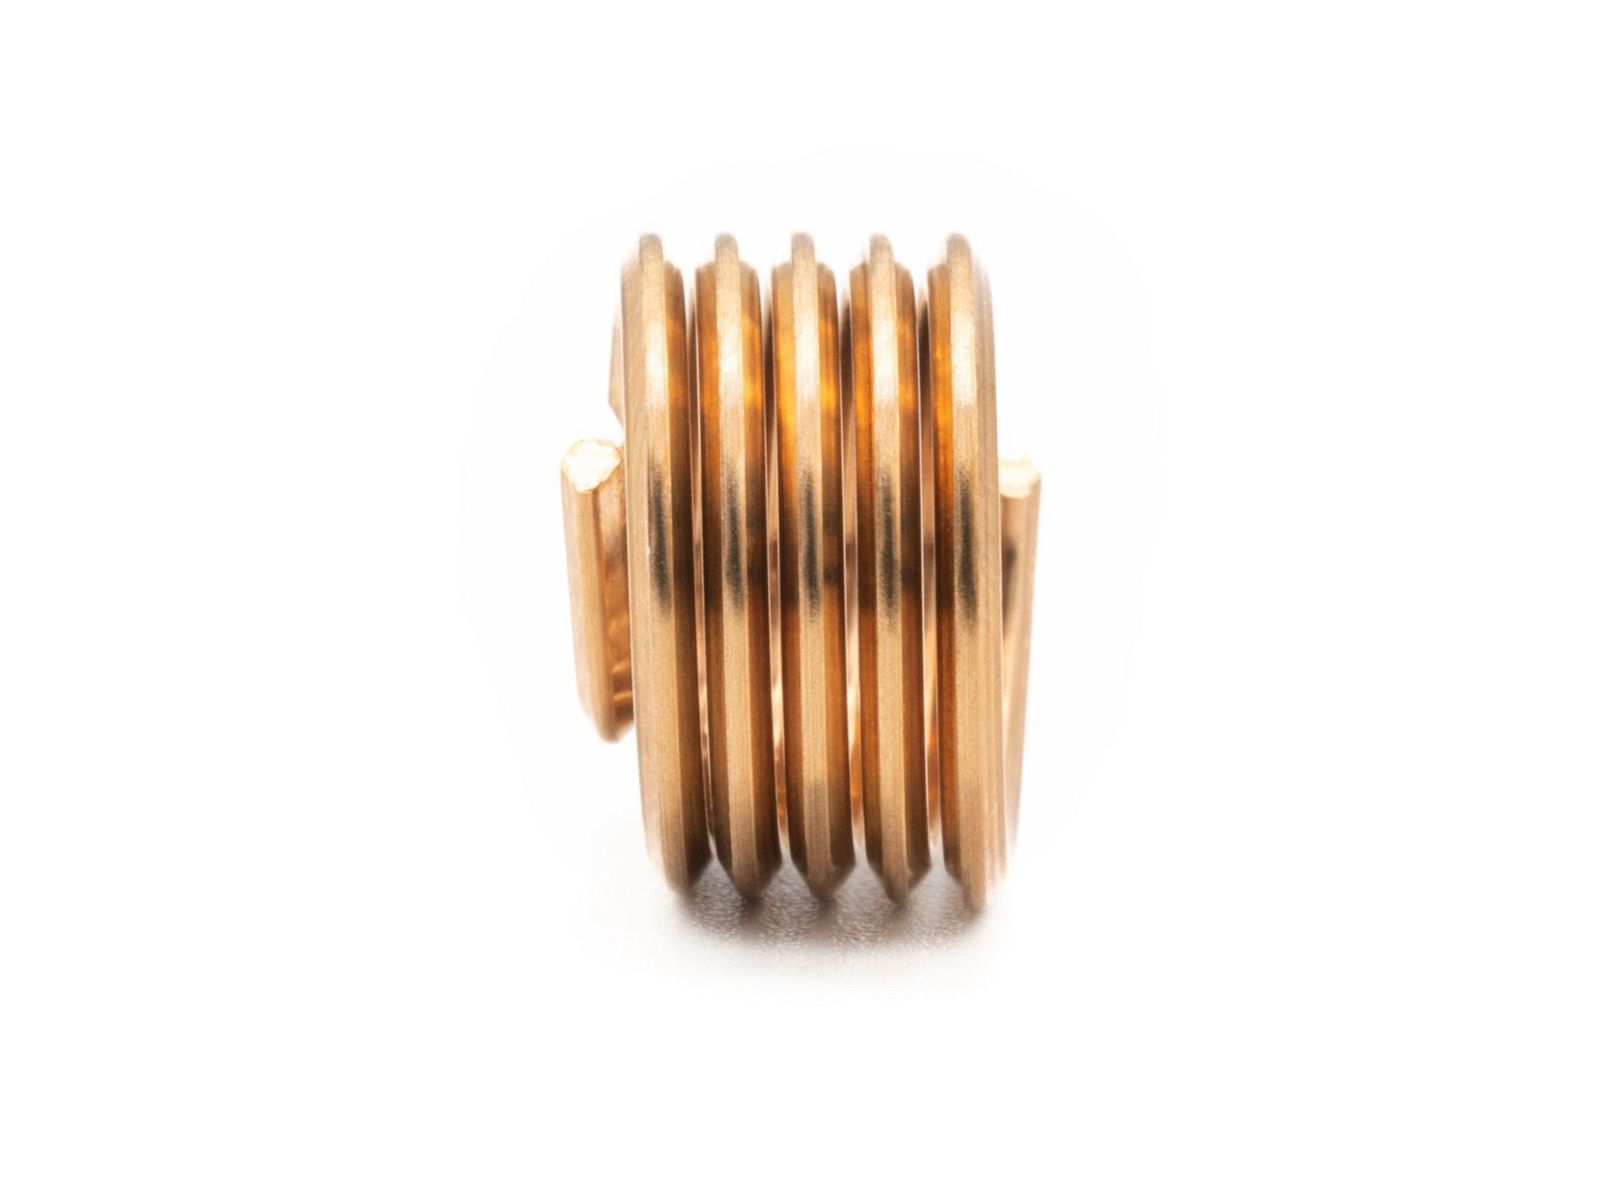 BaerCoil Wire Thread Inserts M 10 x 1.5 - 1.0 D (10 mm) - free running - Bronze - 100 pcs.